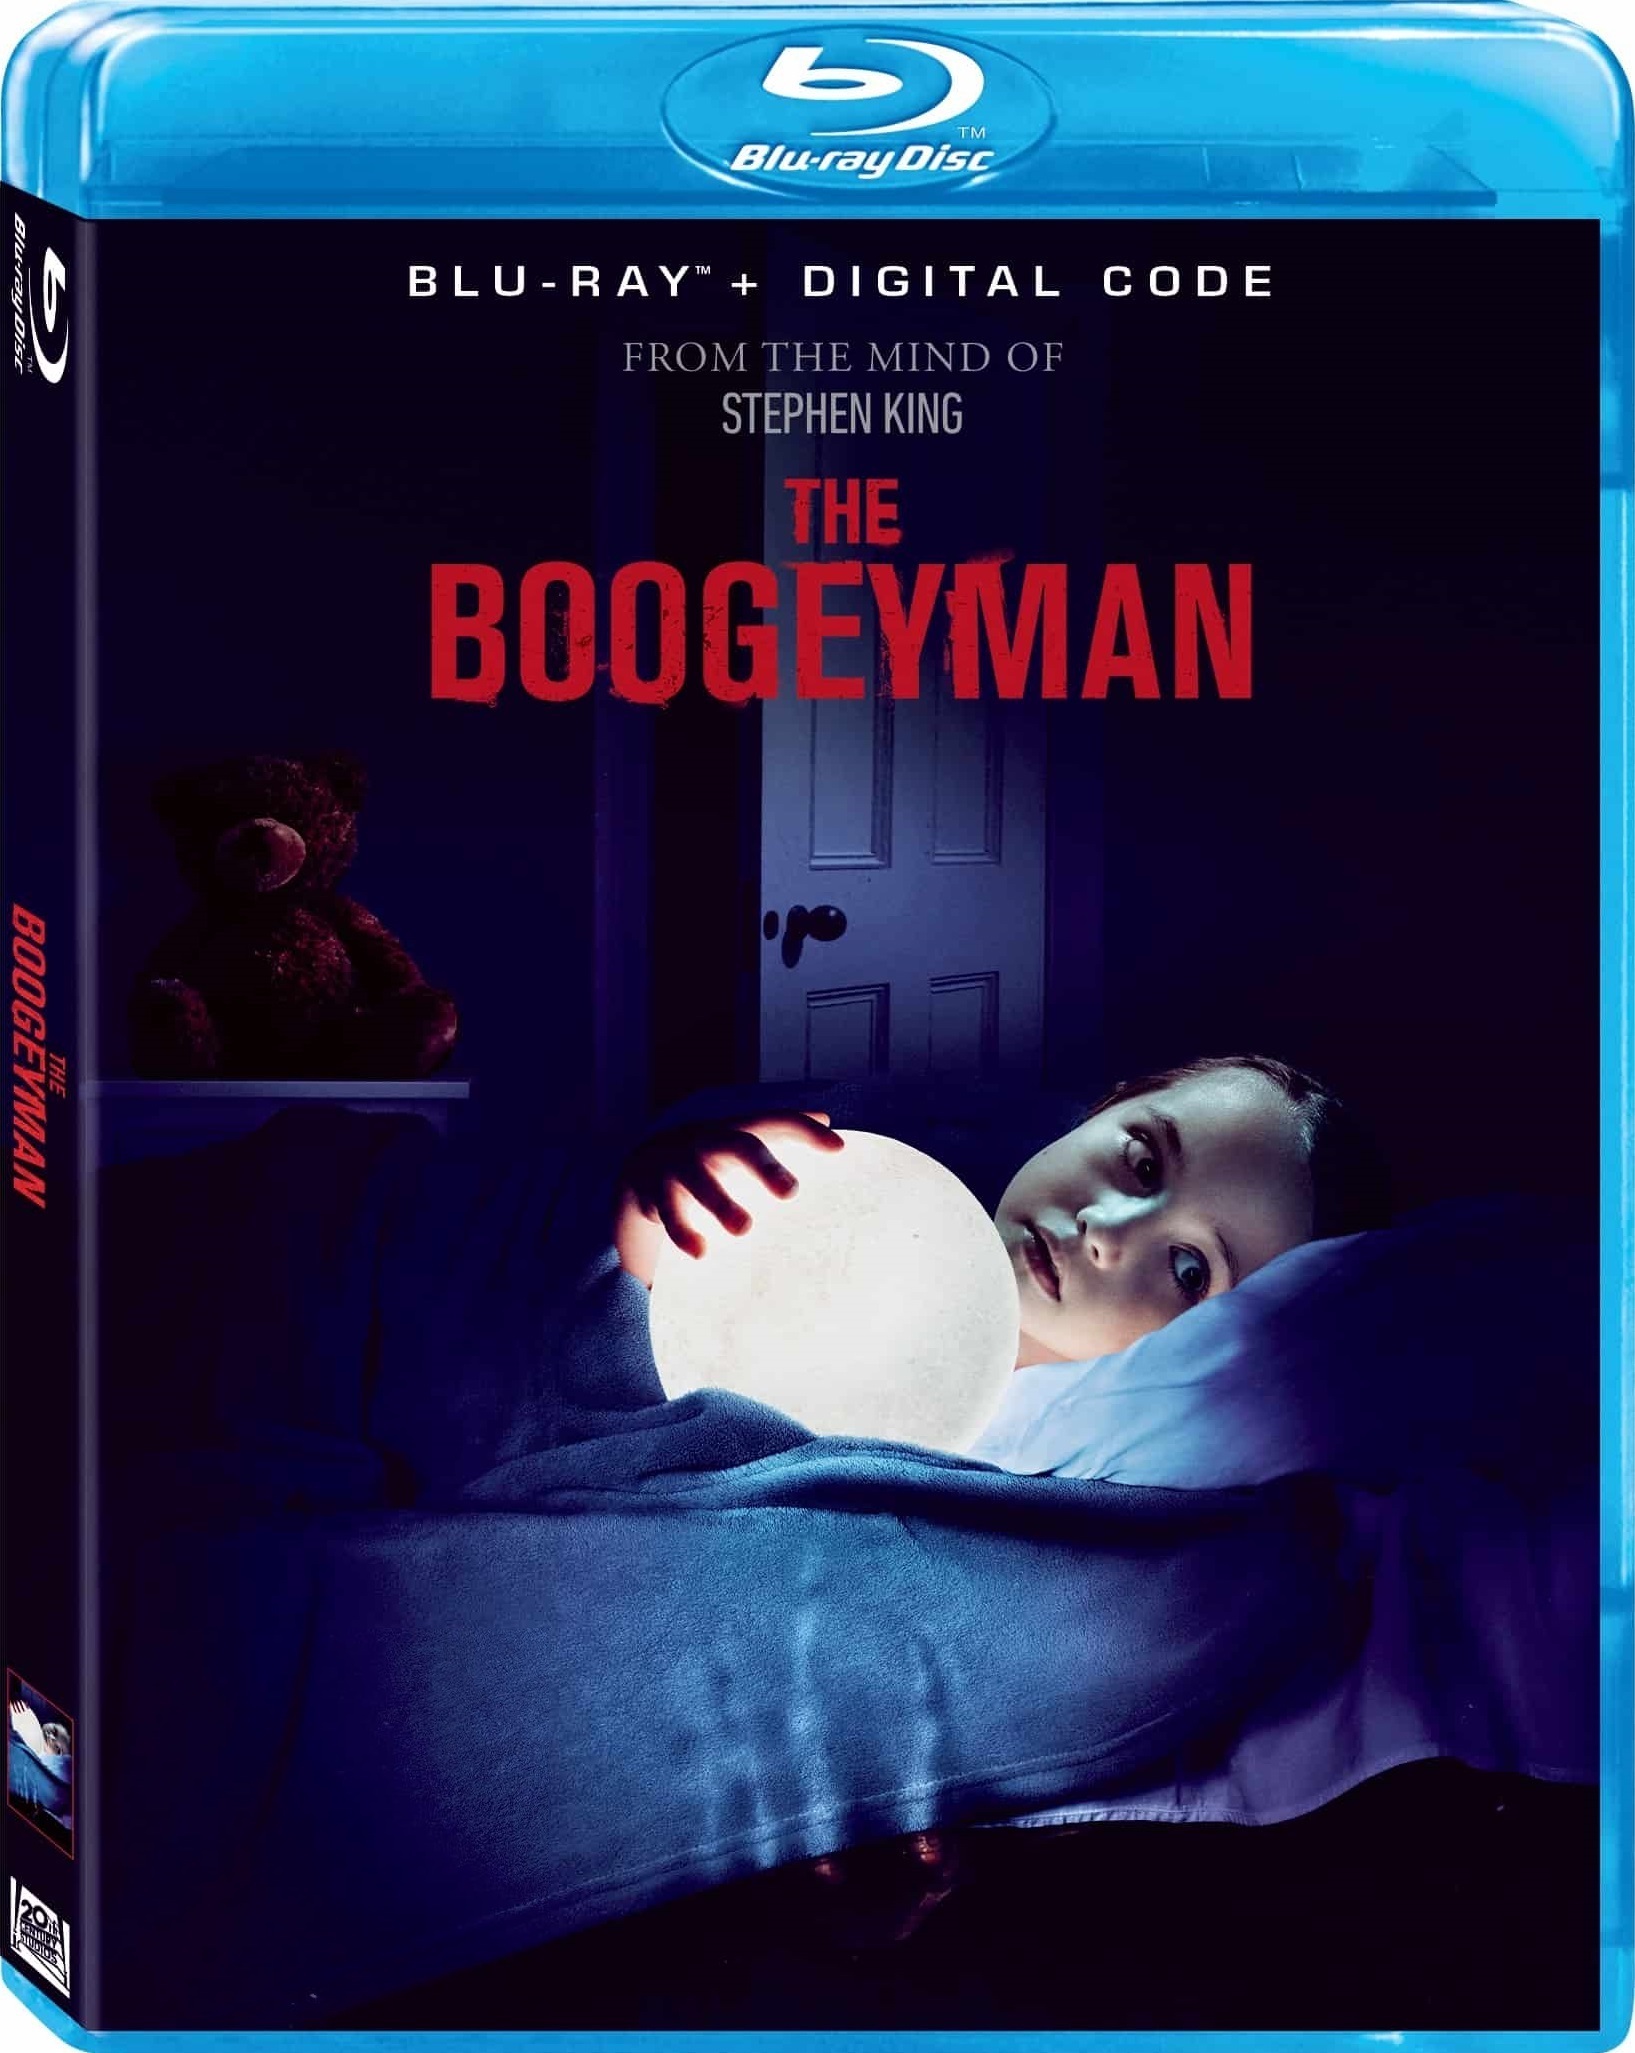 The Boogeyman Bluray